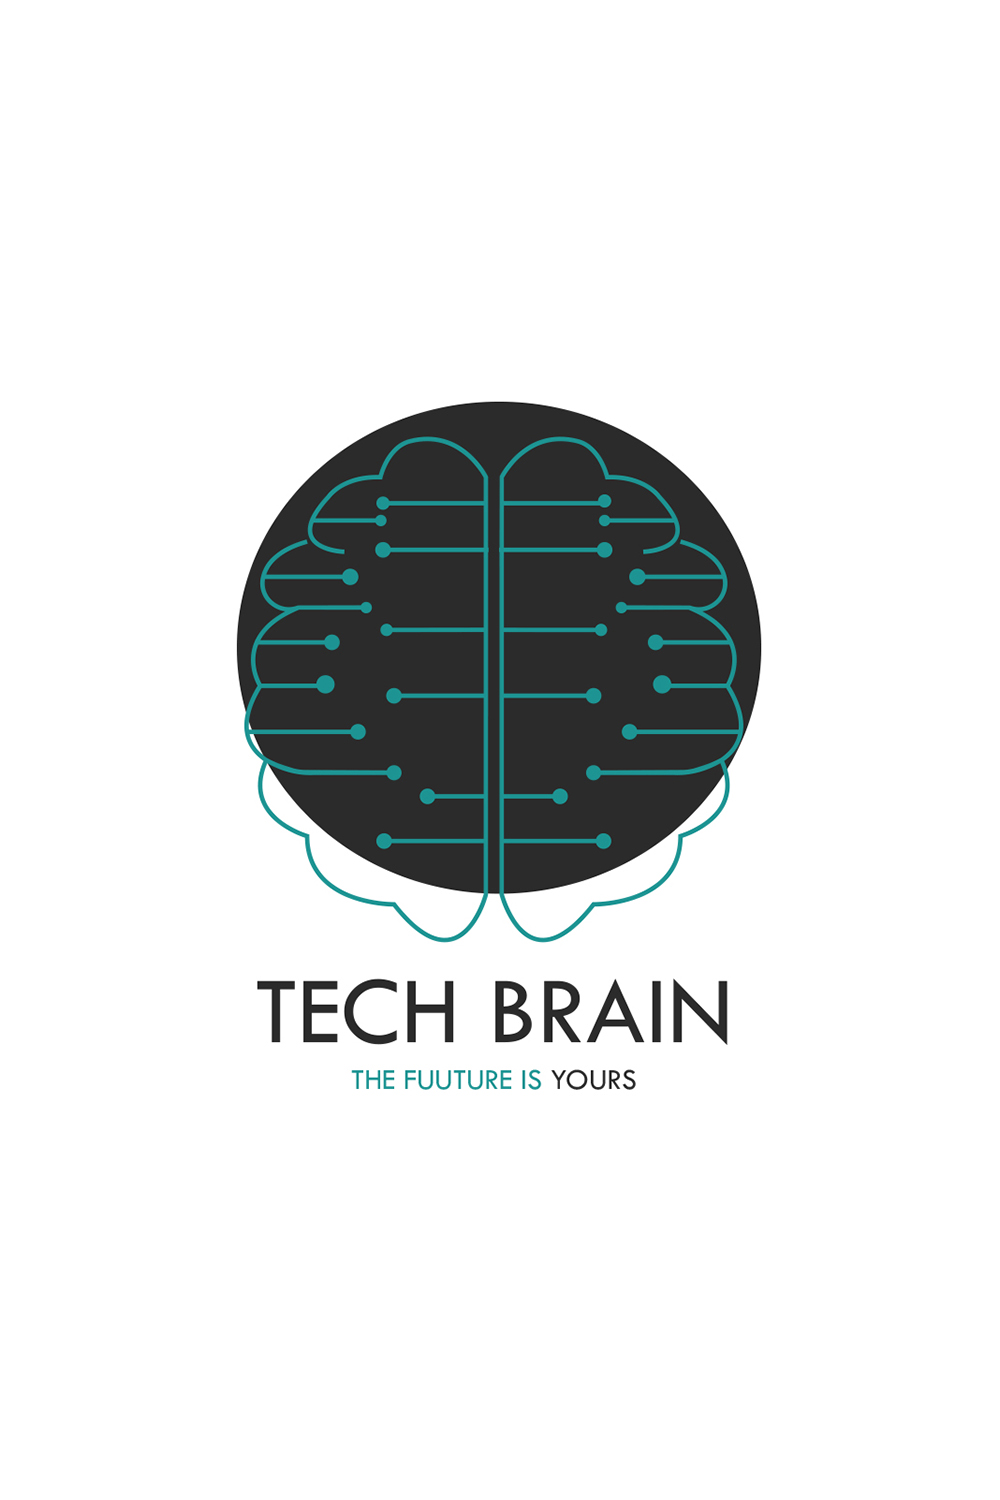 Tech Brain Logo Design Pinterest image.